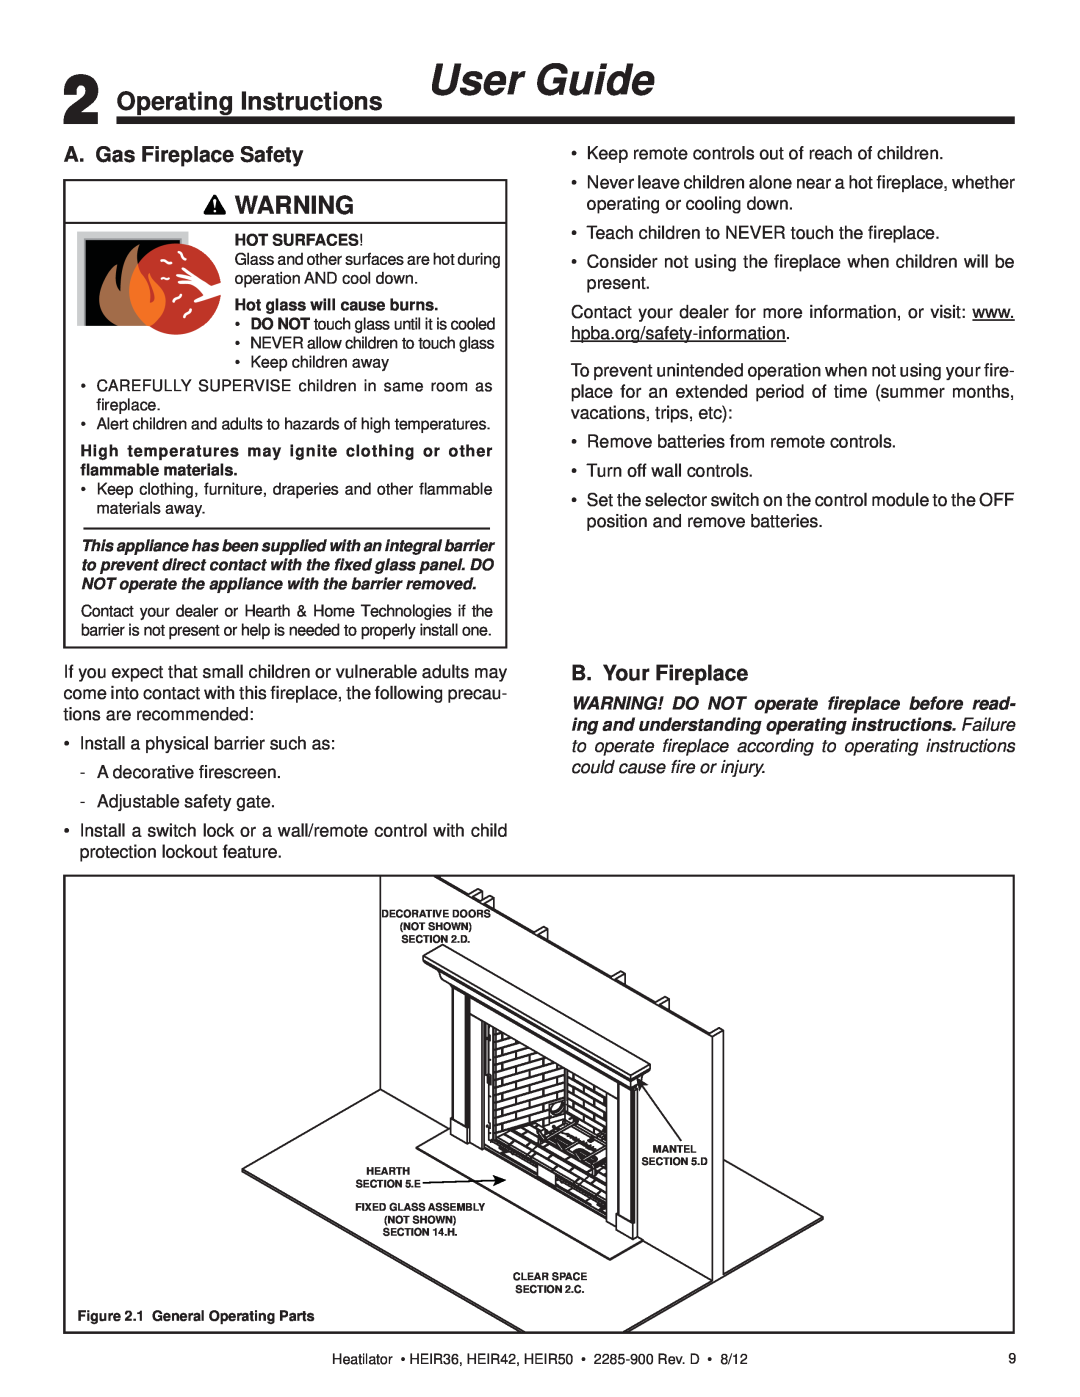 Heatiator HEIR36H, HEIR42H, HEIR42T, HEIR50T Operating Instructions User Guide, A. Gas Fireplace Safety, B. Your Fireplace 